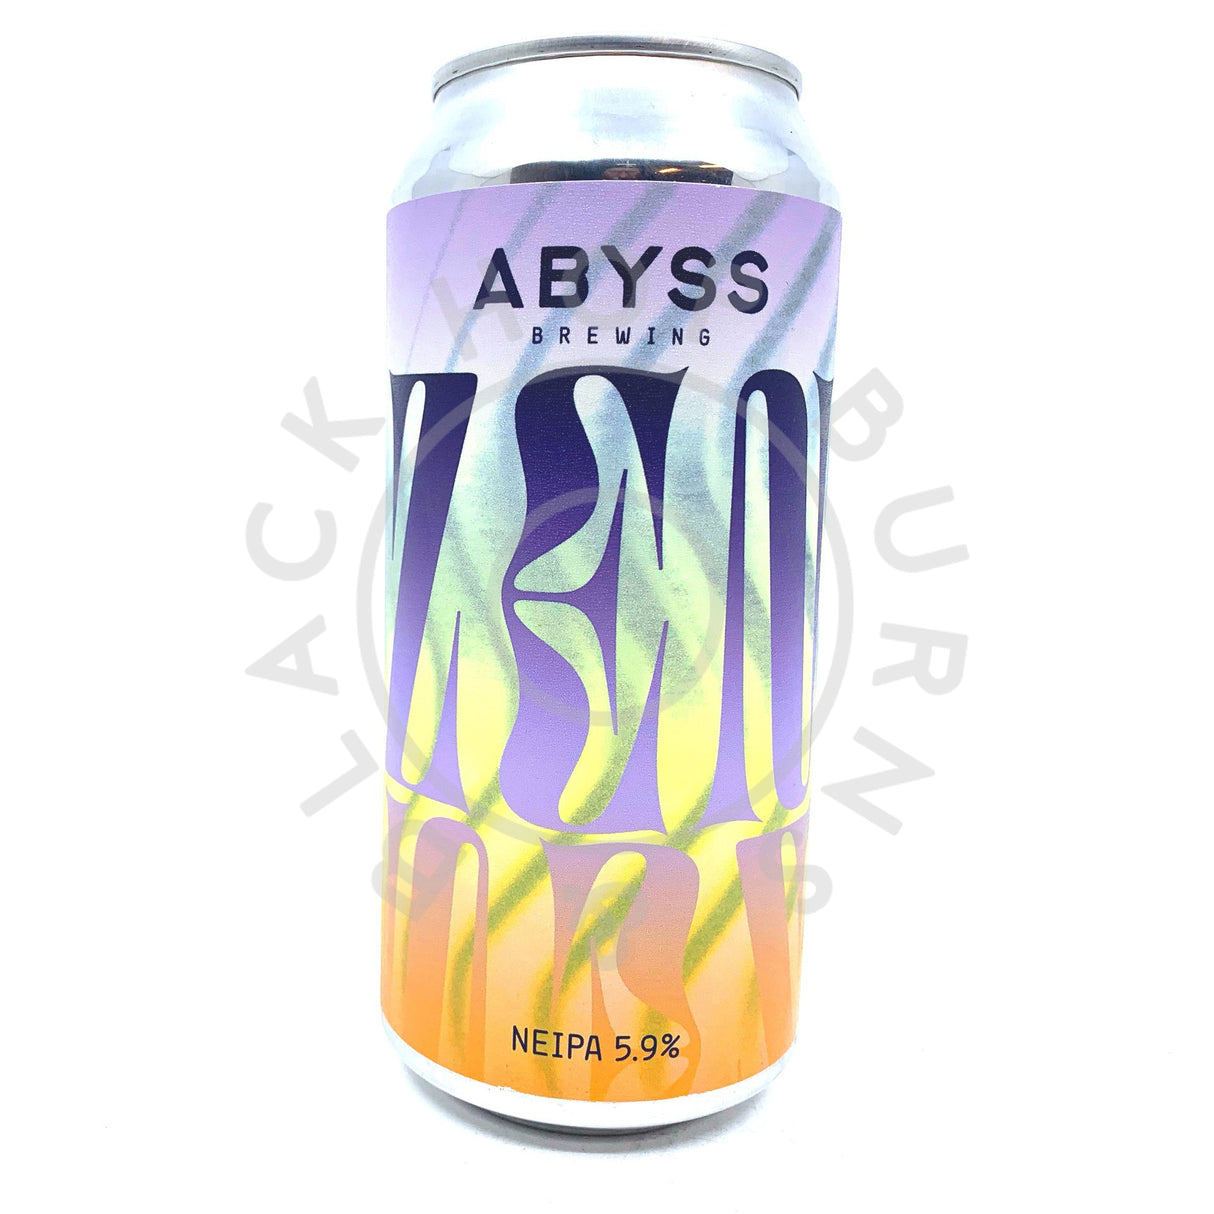 Abyss Brewing Zen Level II New England IPA 5.9% (440ml can)-Hop Burns & Black